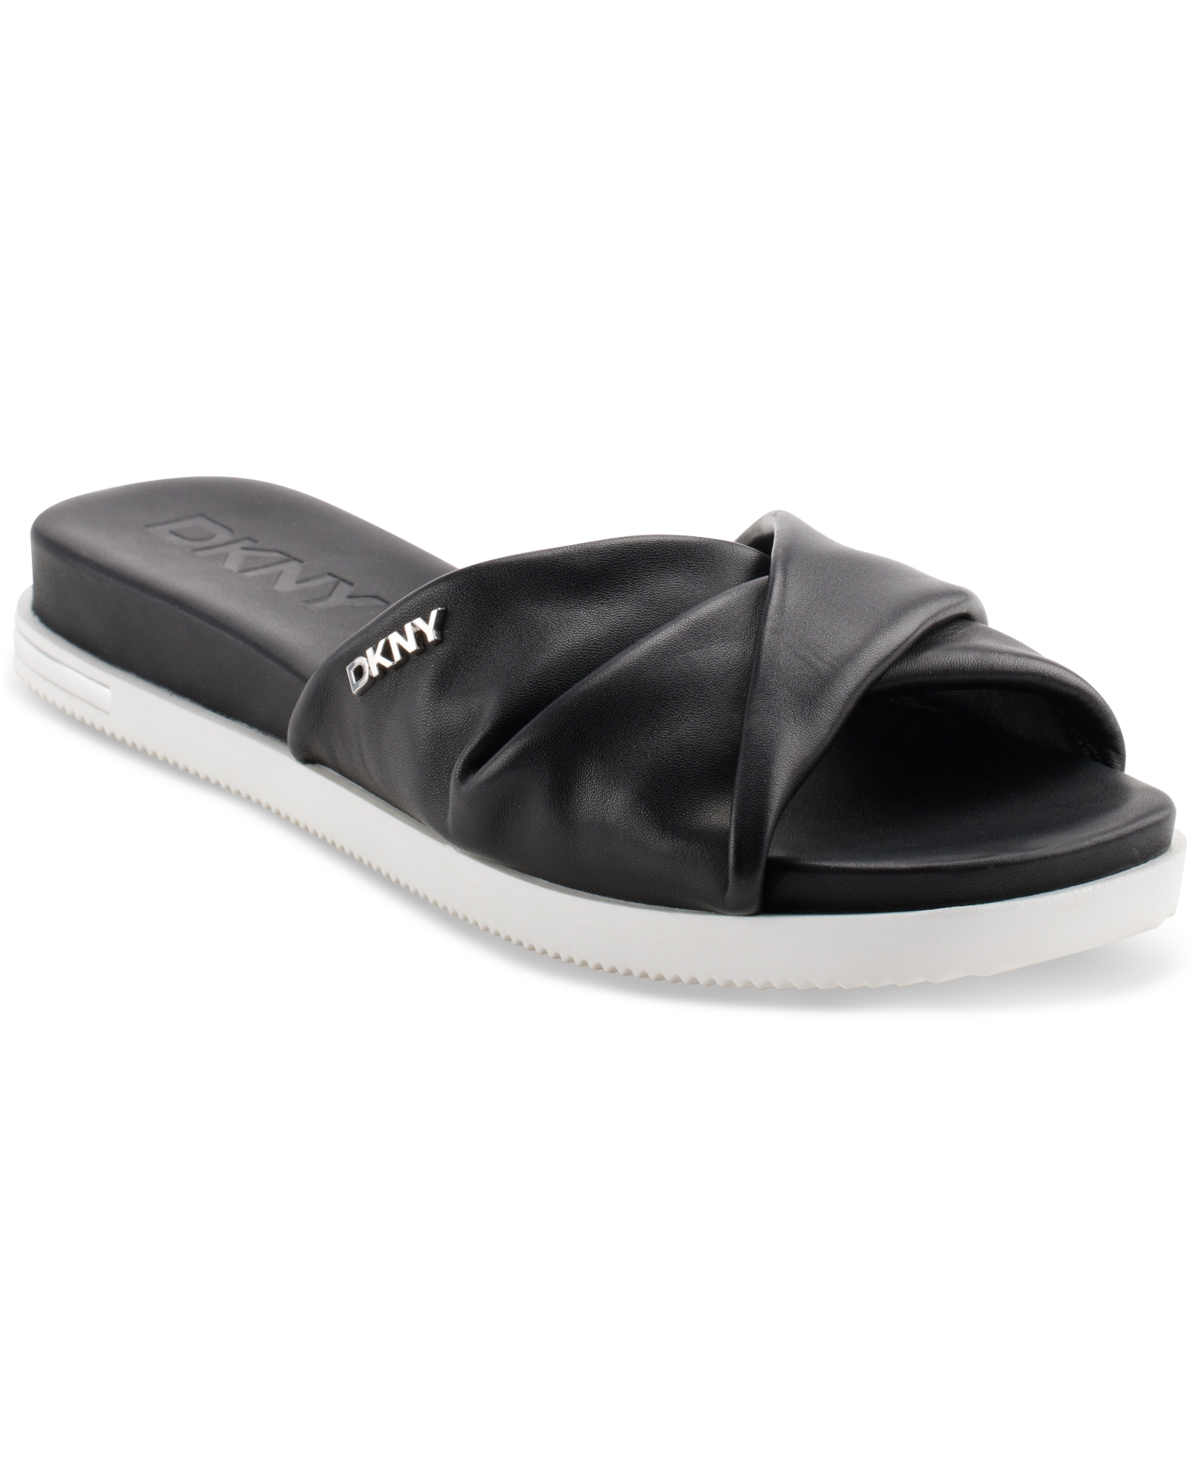 Women's Jezebel Twisted Slide Sandals - Black